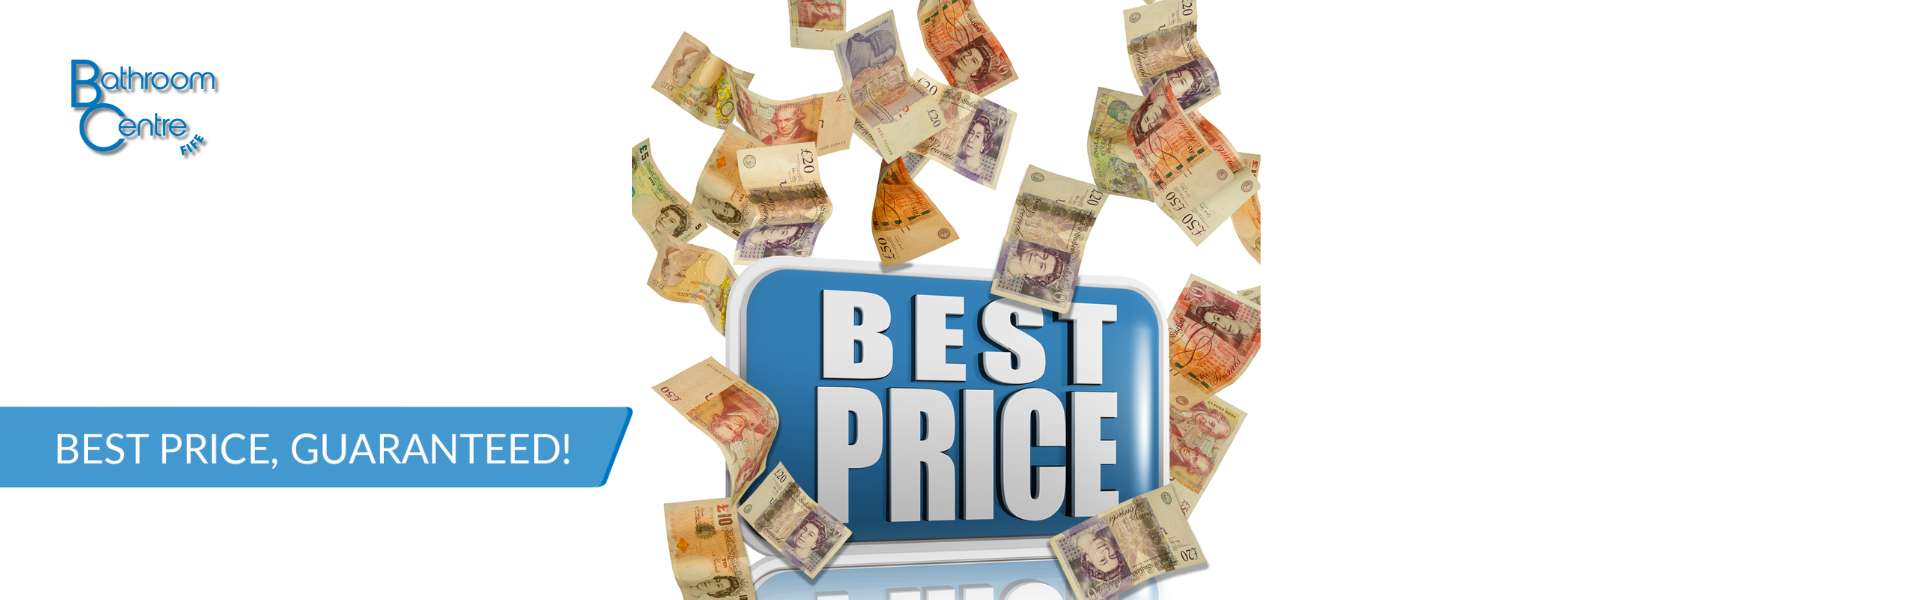 BCF - Best Price Guaranteed LP Header image (1920 × 600px)
